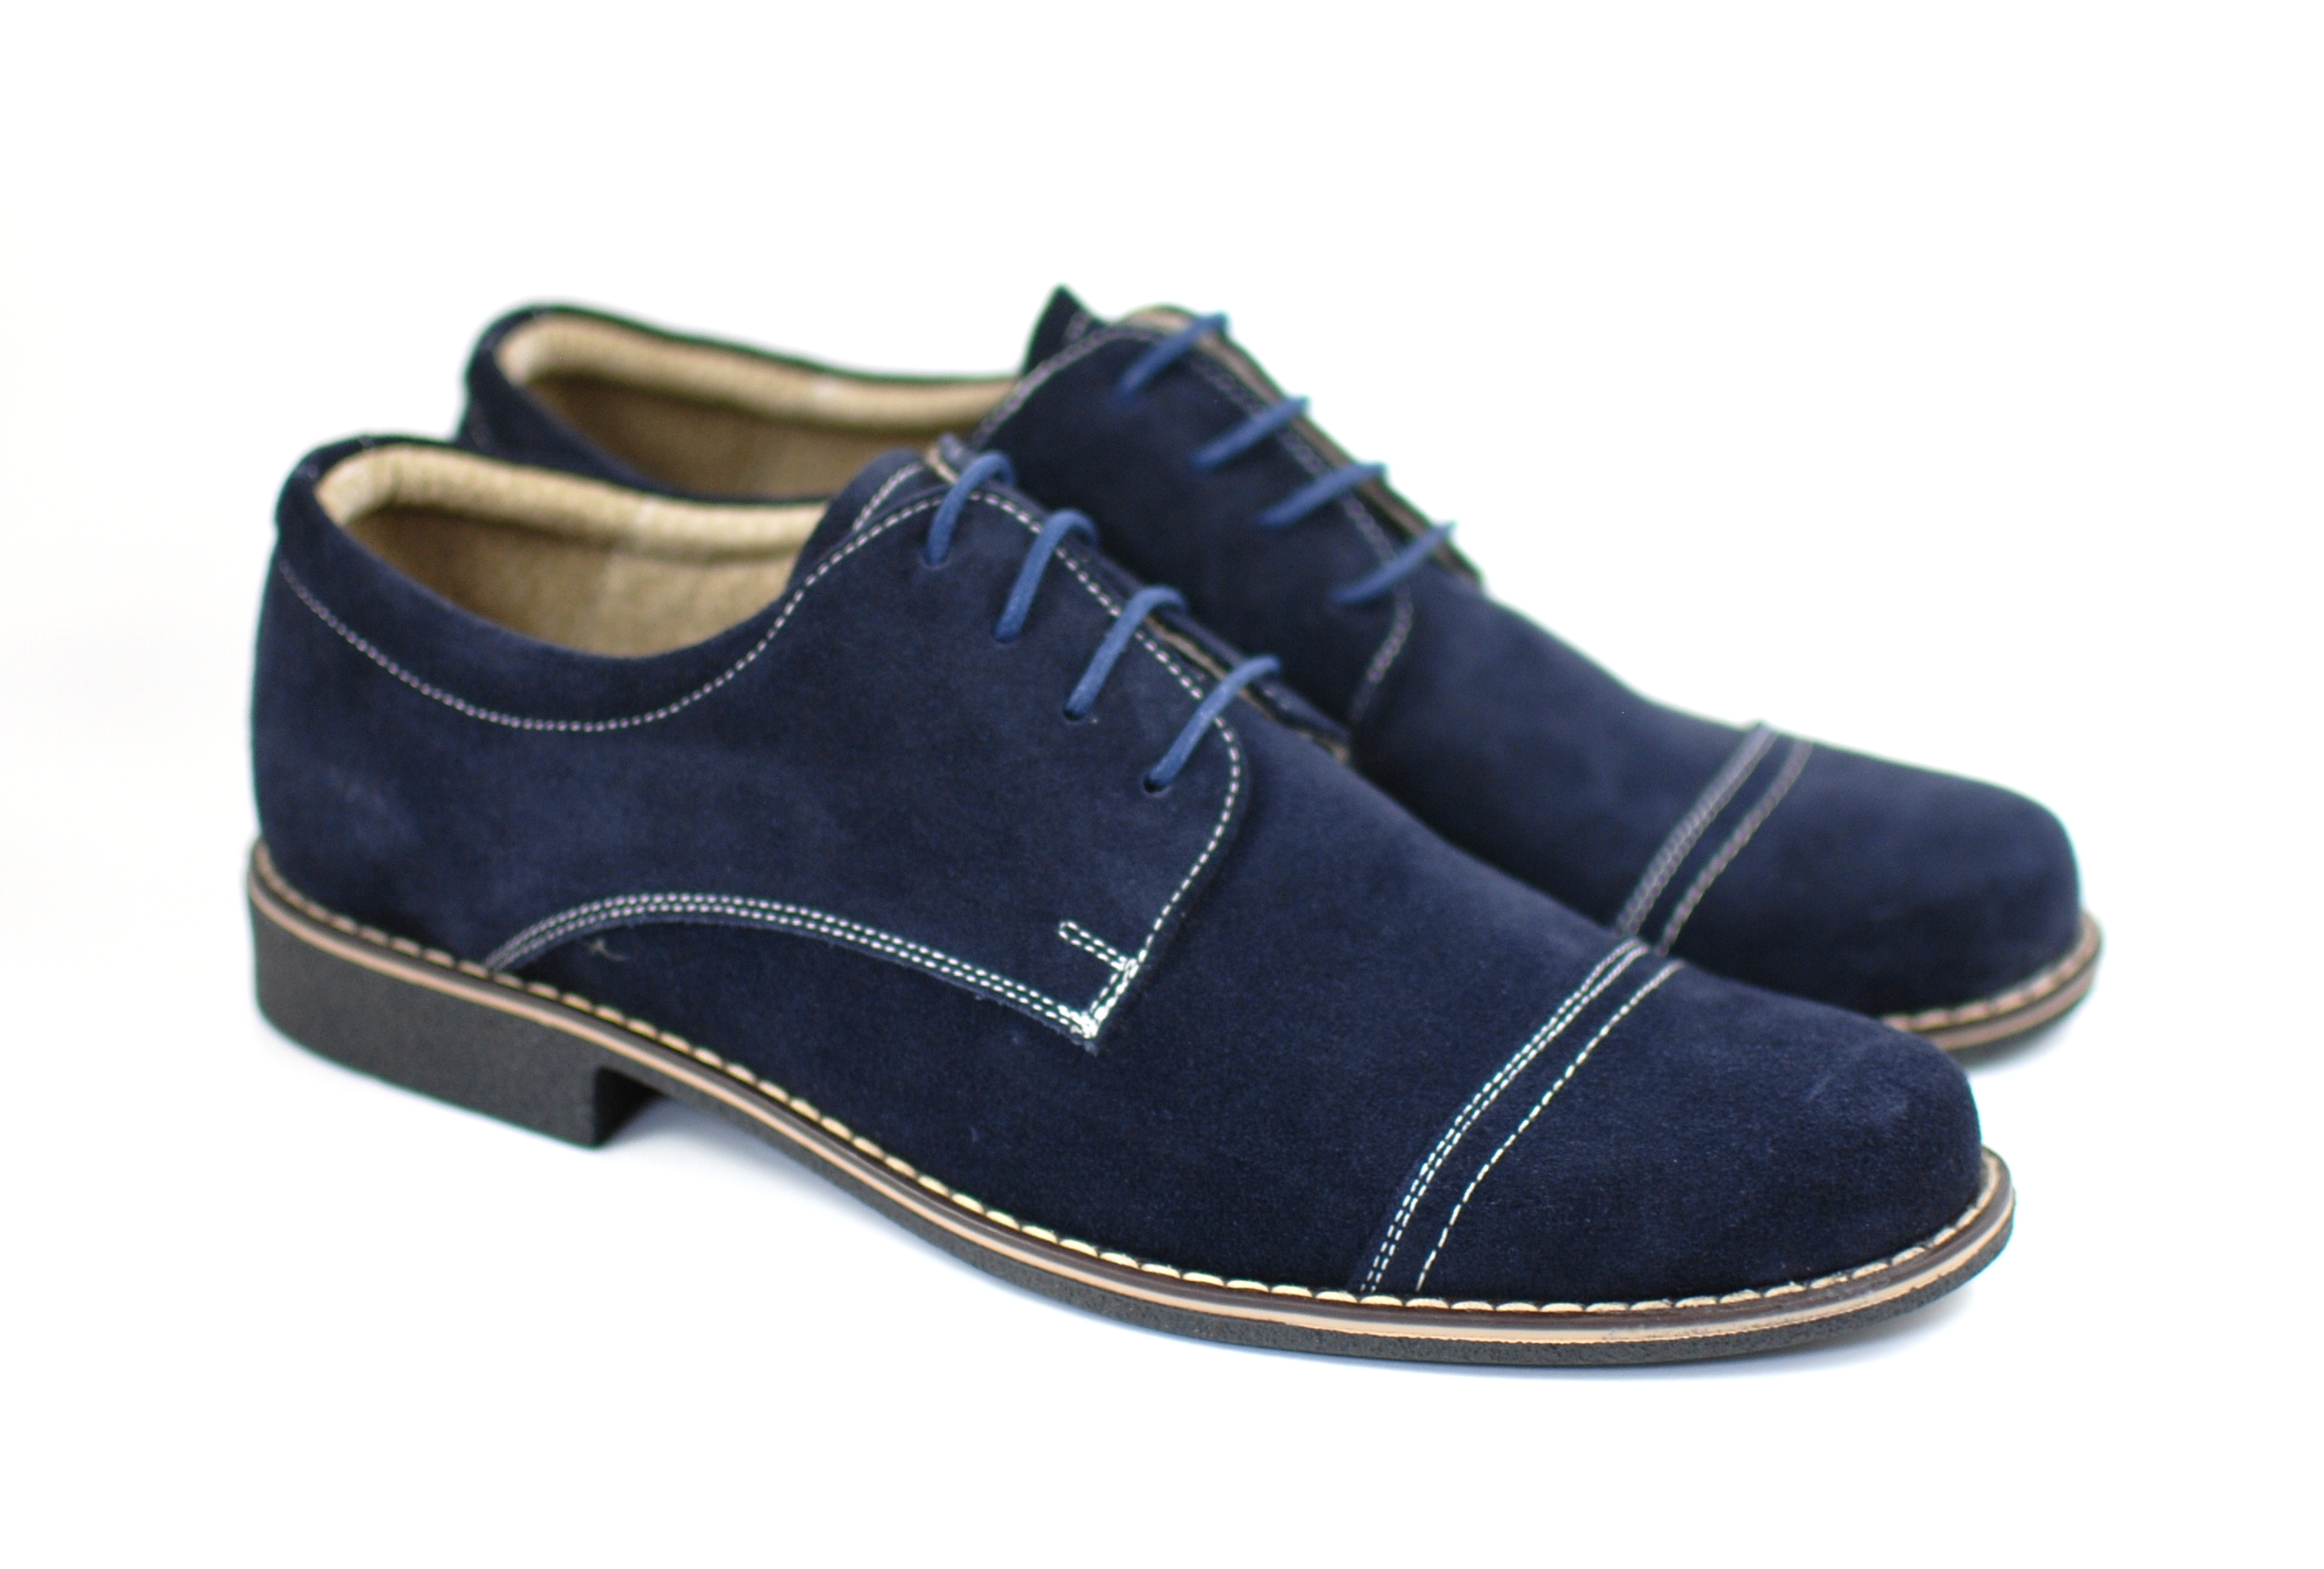 Pantofi barbati eleganti din piele naturala bleumarin - P34BL